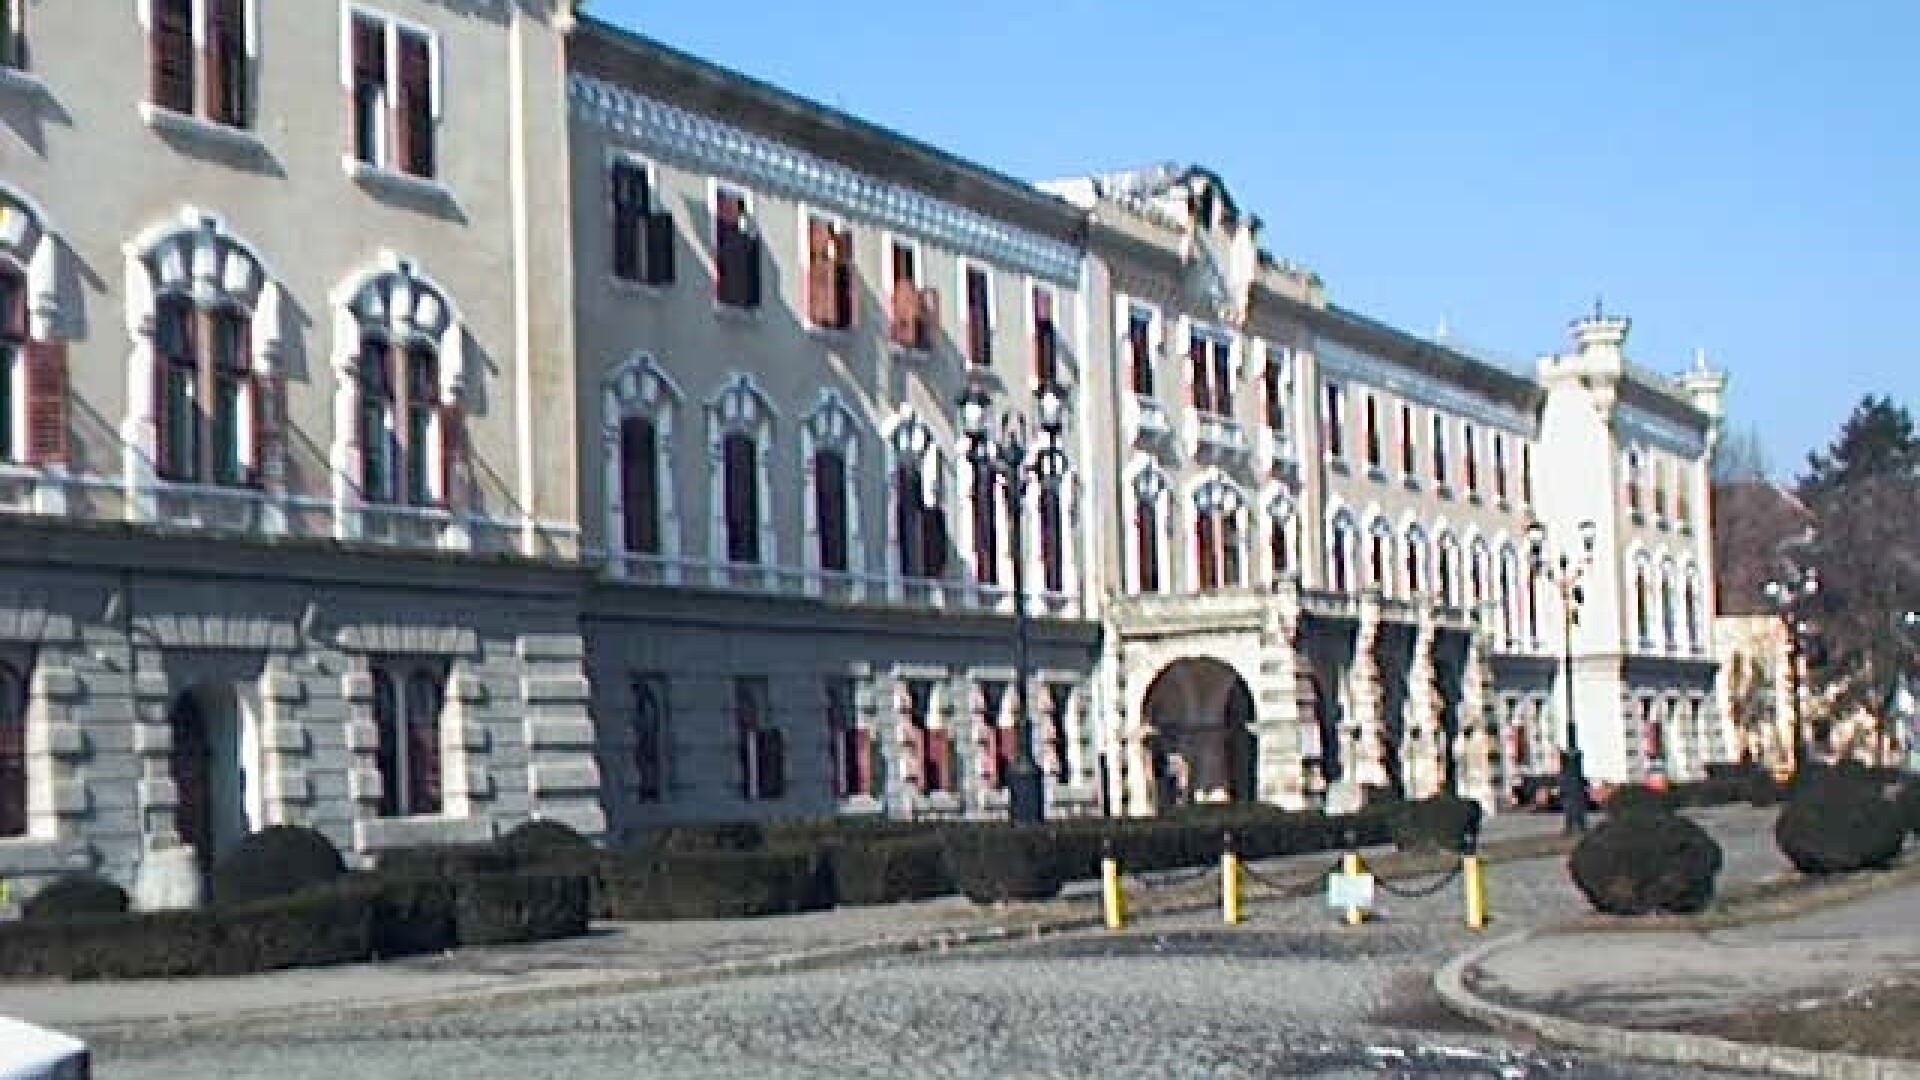 Muzeul National al Unirii din Alba Iulia